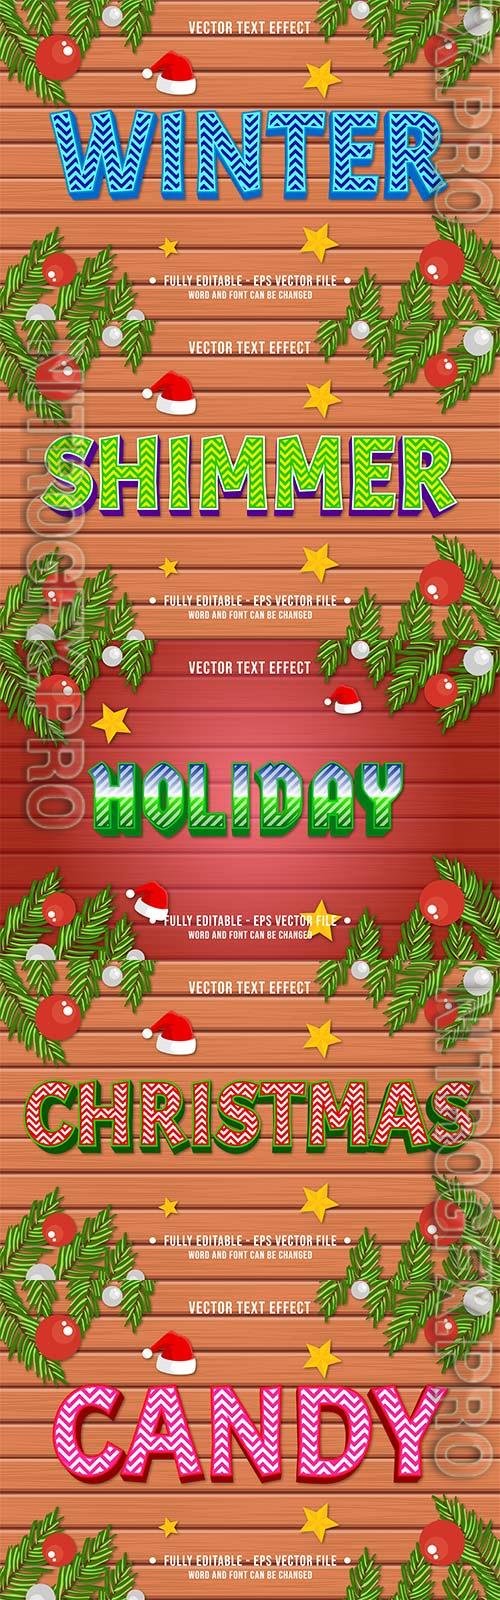 2022 New year, Merry christmas editable text effect premium vector vol 18